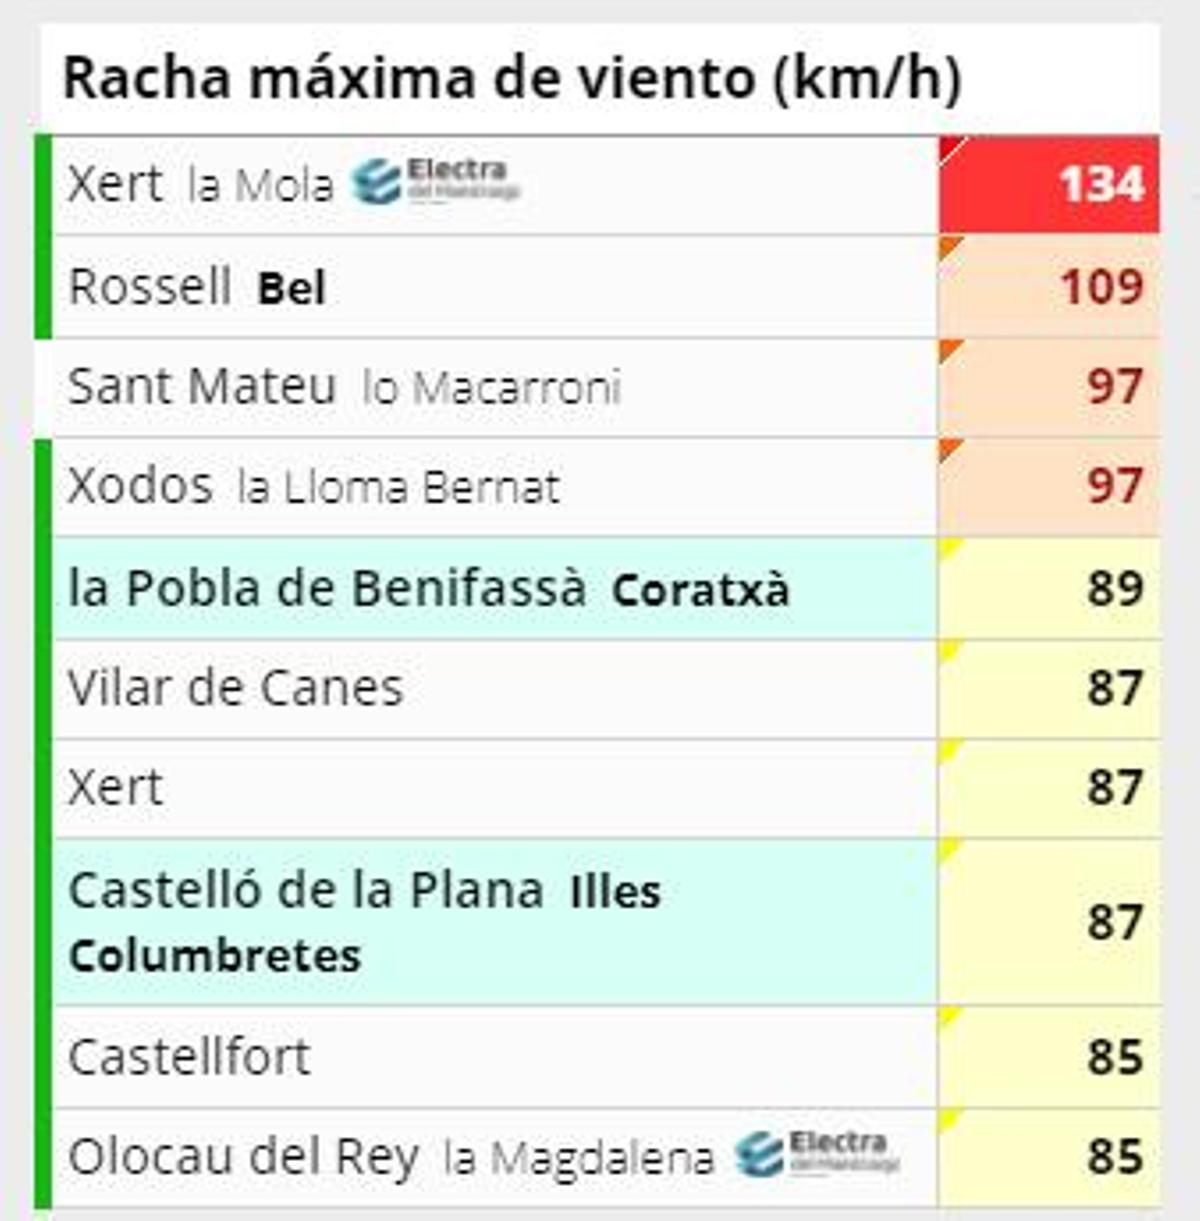 Rachas máximas de viento registradas en Castellón.